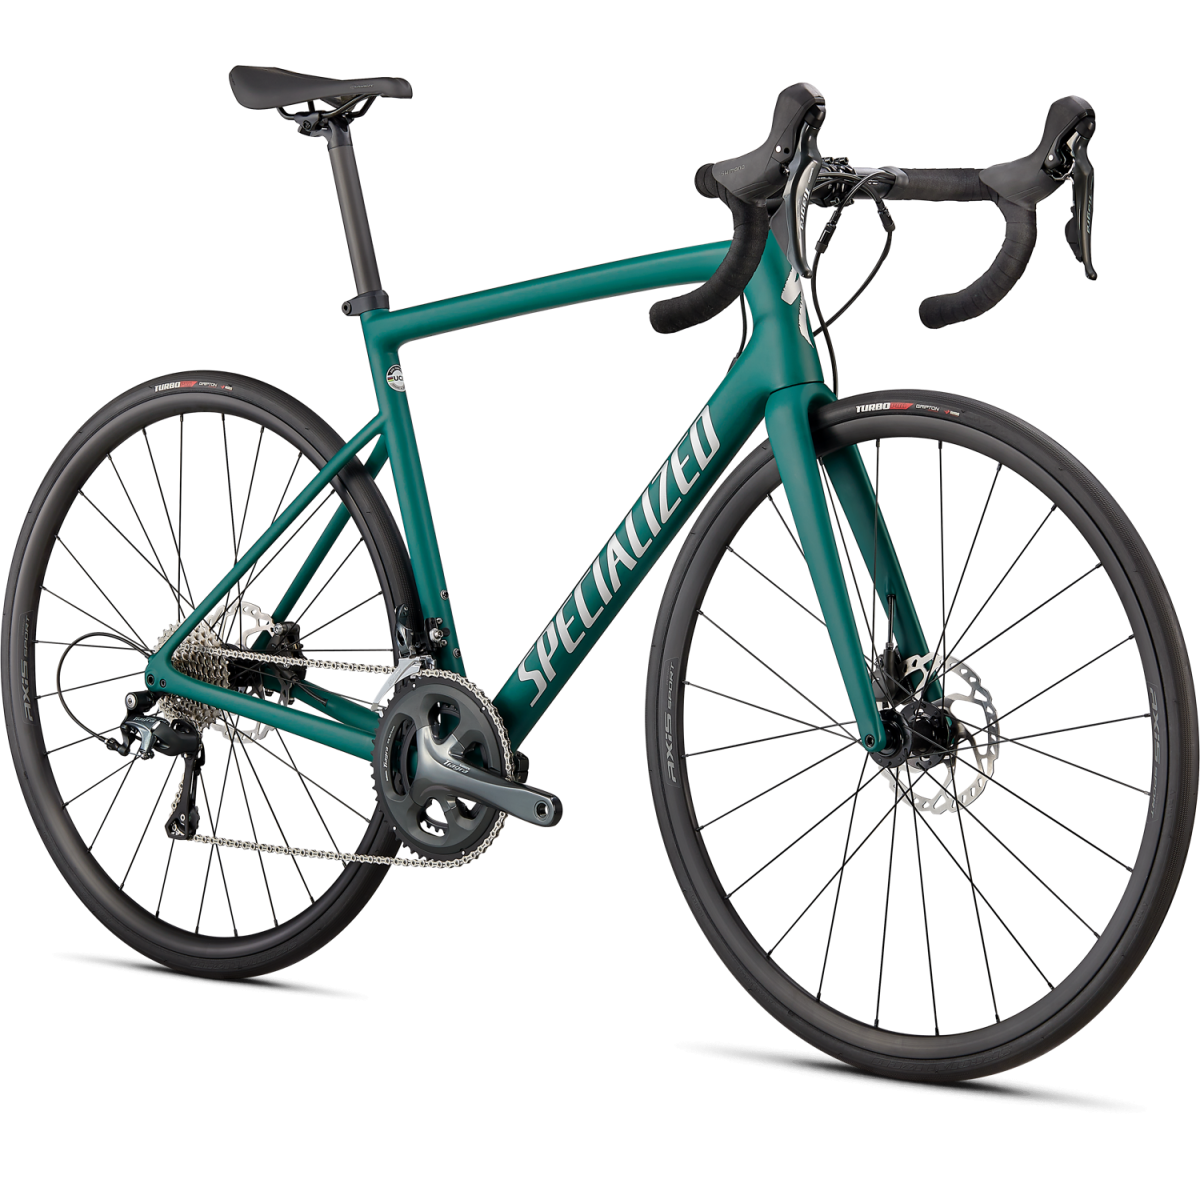 Specialized Tarmac SL6 plento dviratis / Pine Green